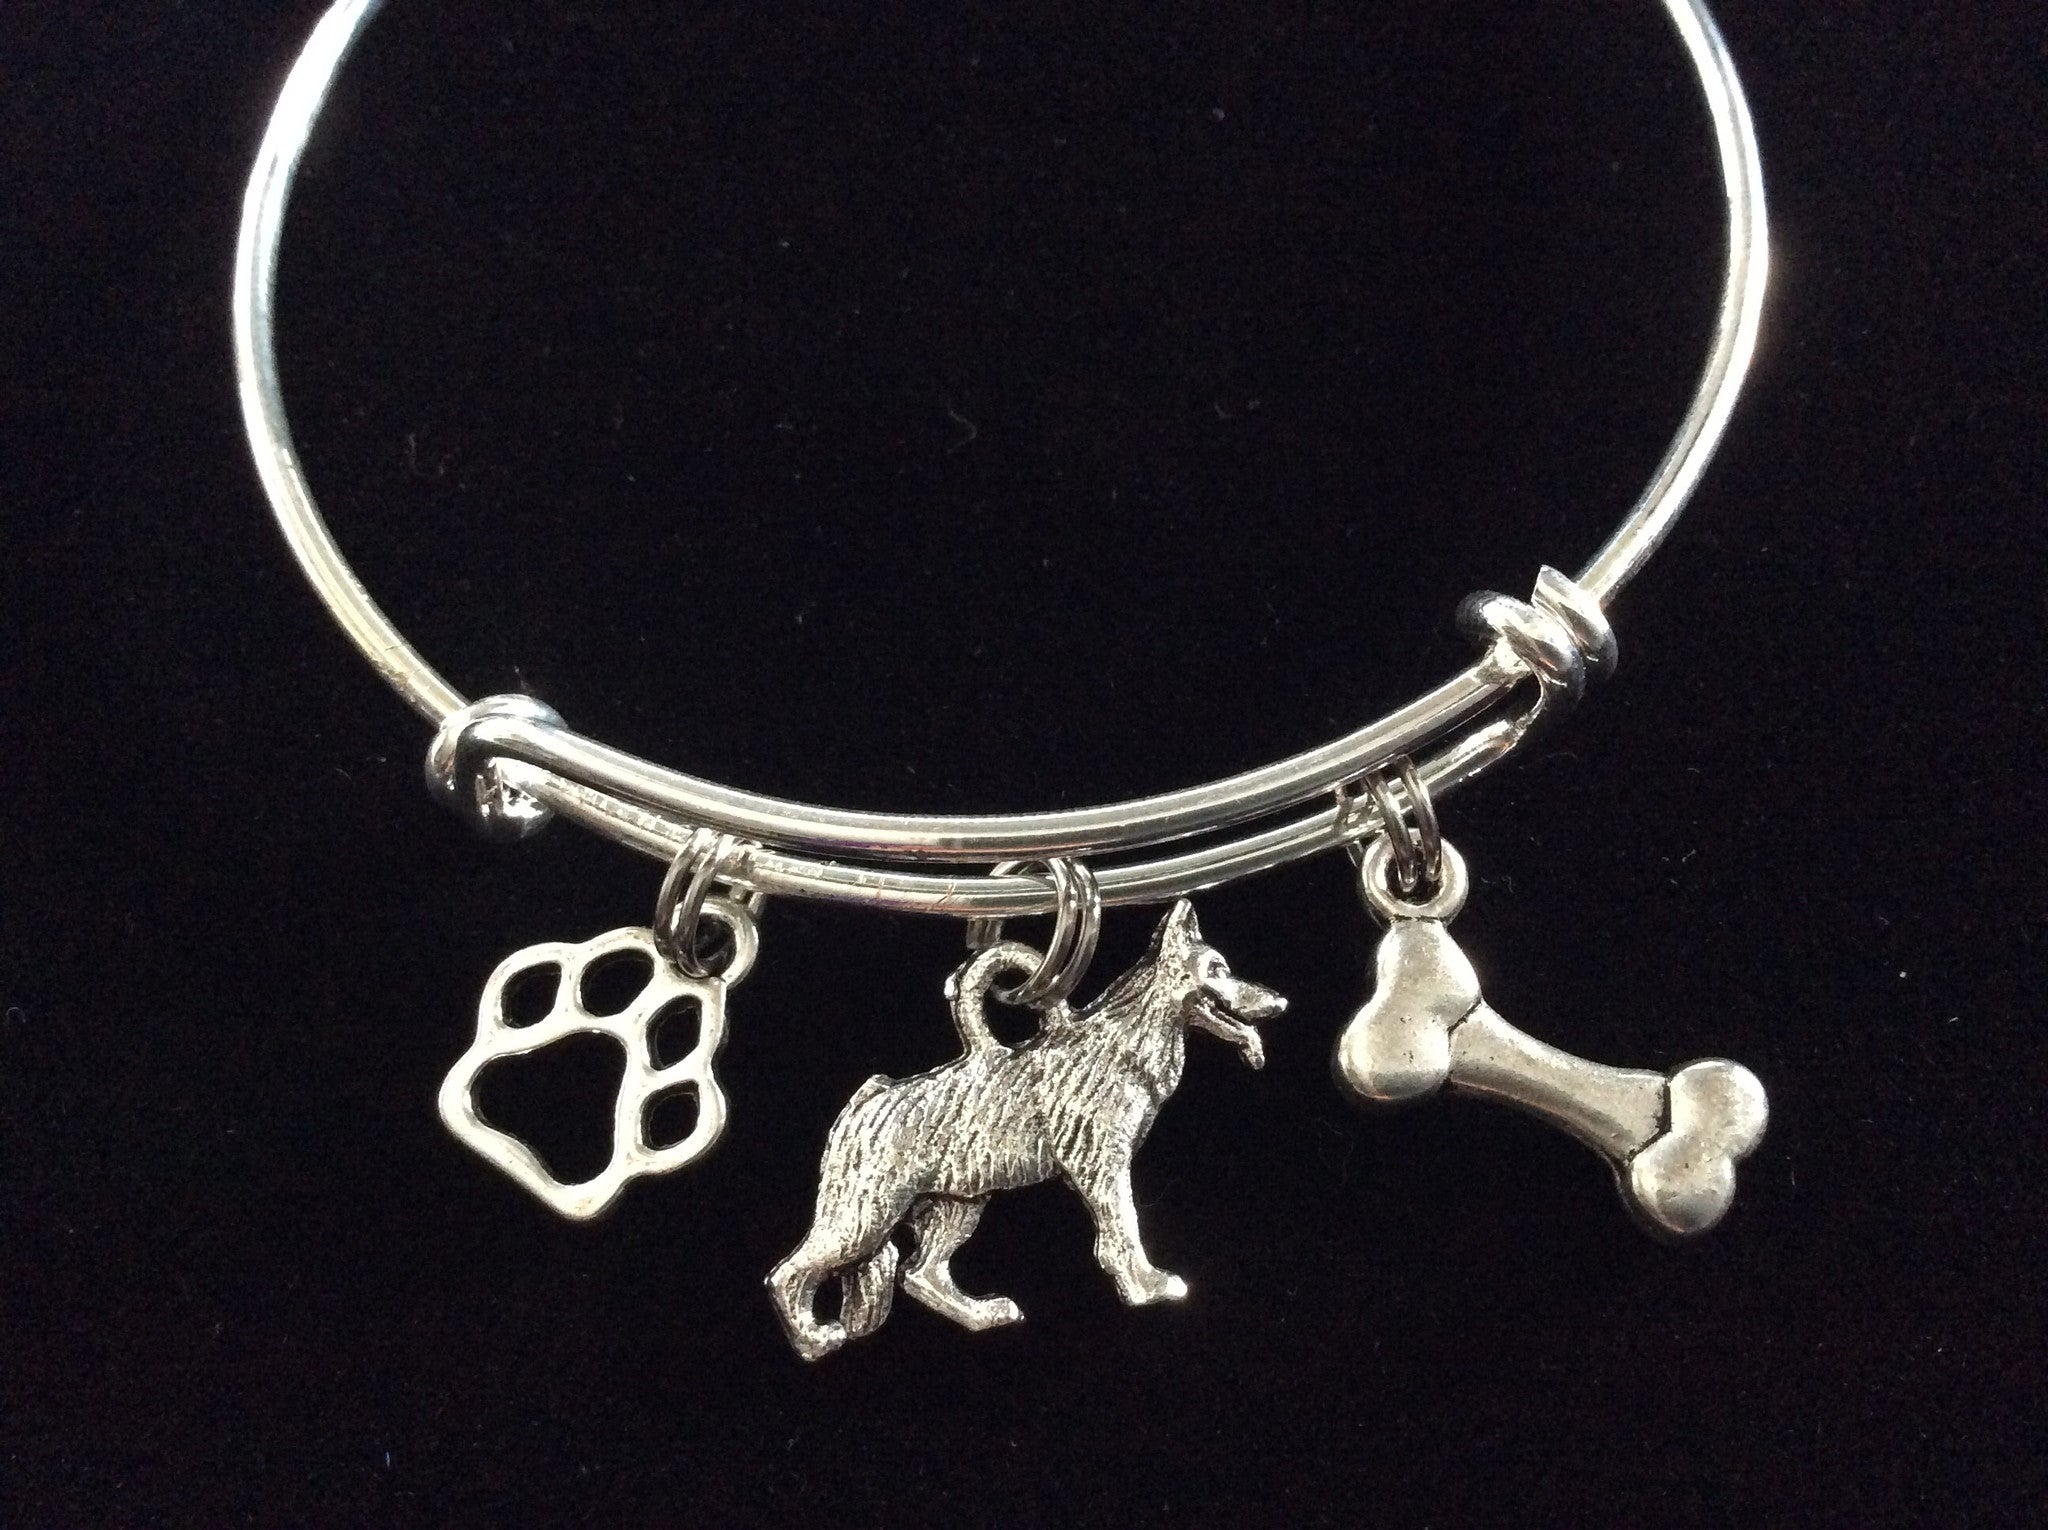 German Shepherd Dog Charm on a Silver Expandable Adjustable Bangle Bracelet Meaningful Dog Lover Gif